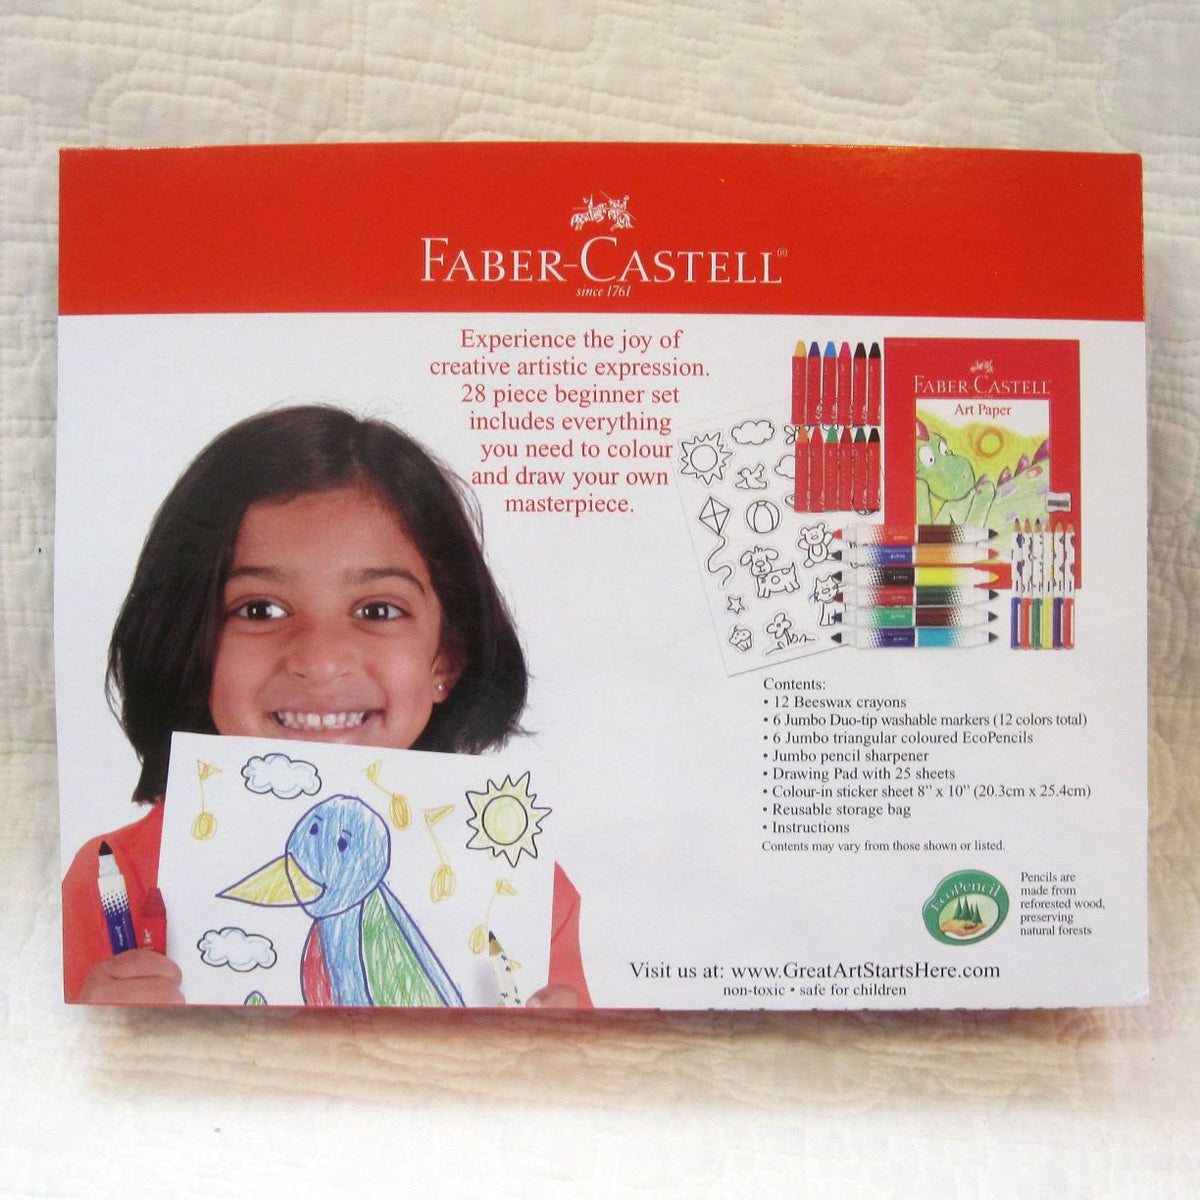 Faber-Castell Young Artist Essentials Gift Set- Child Art Set for